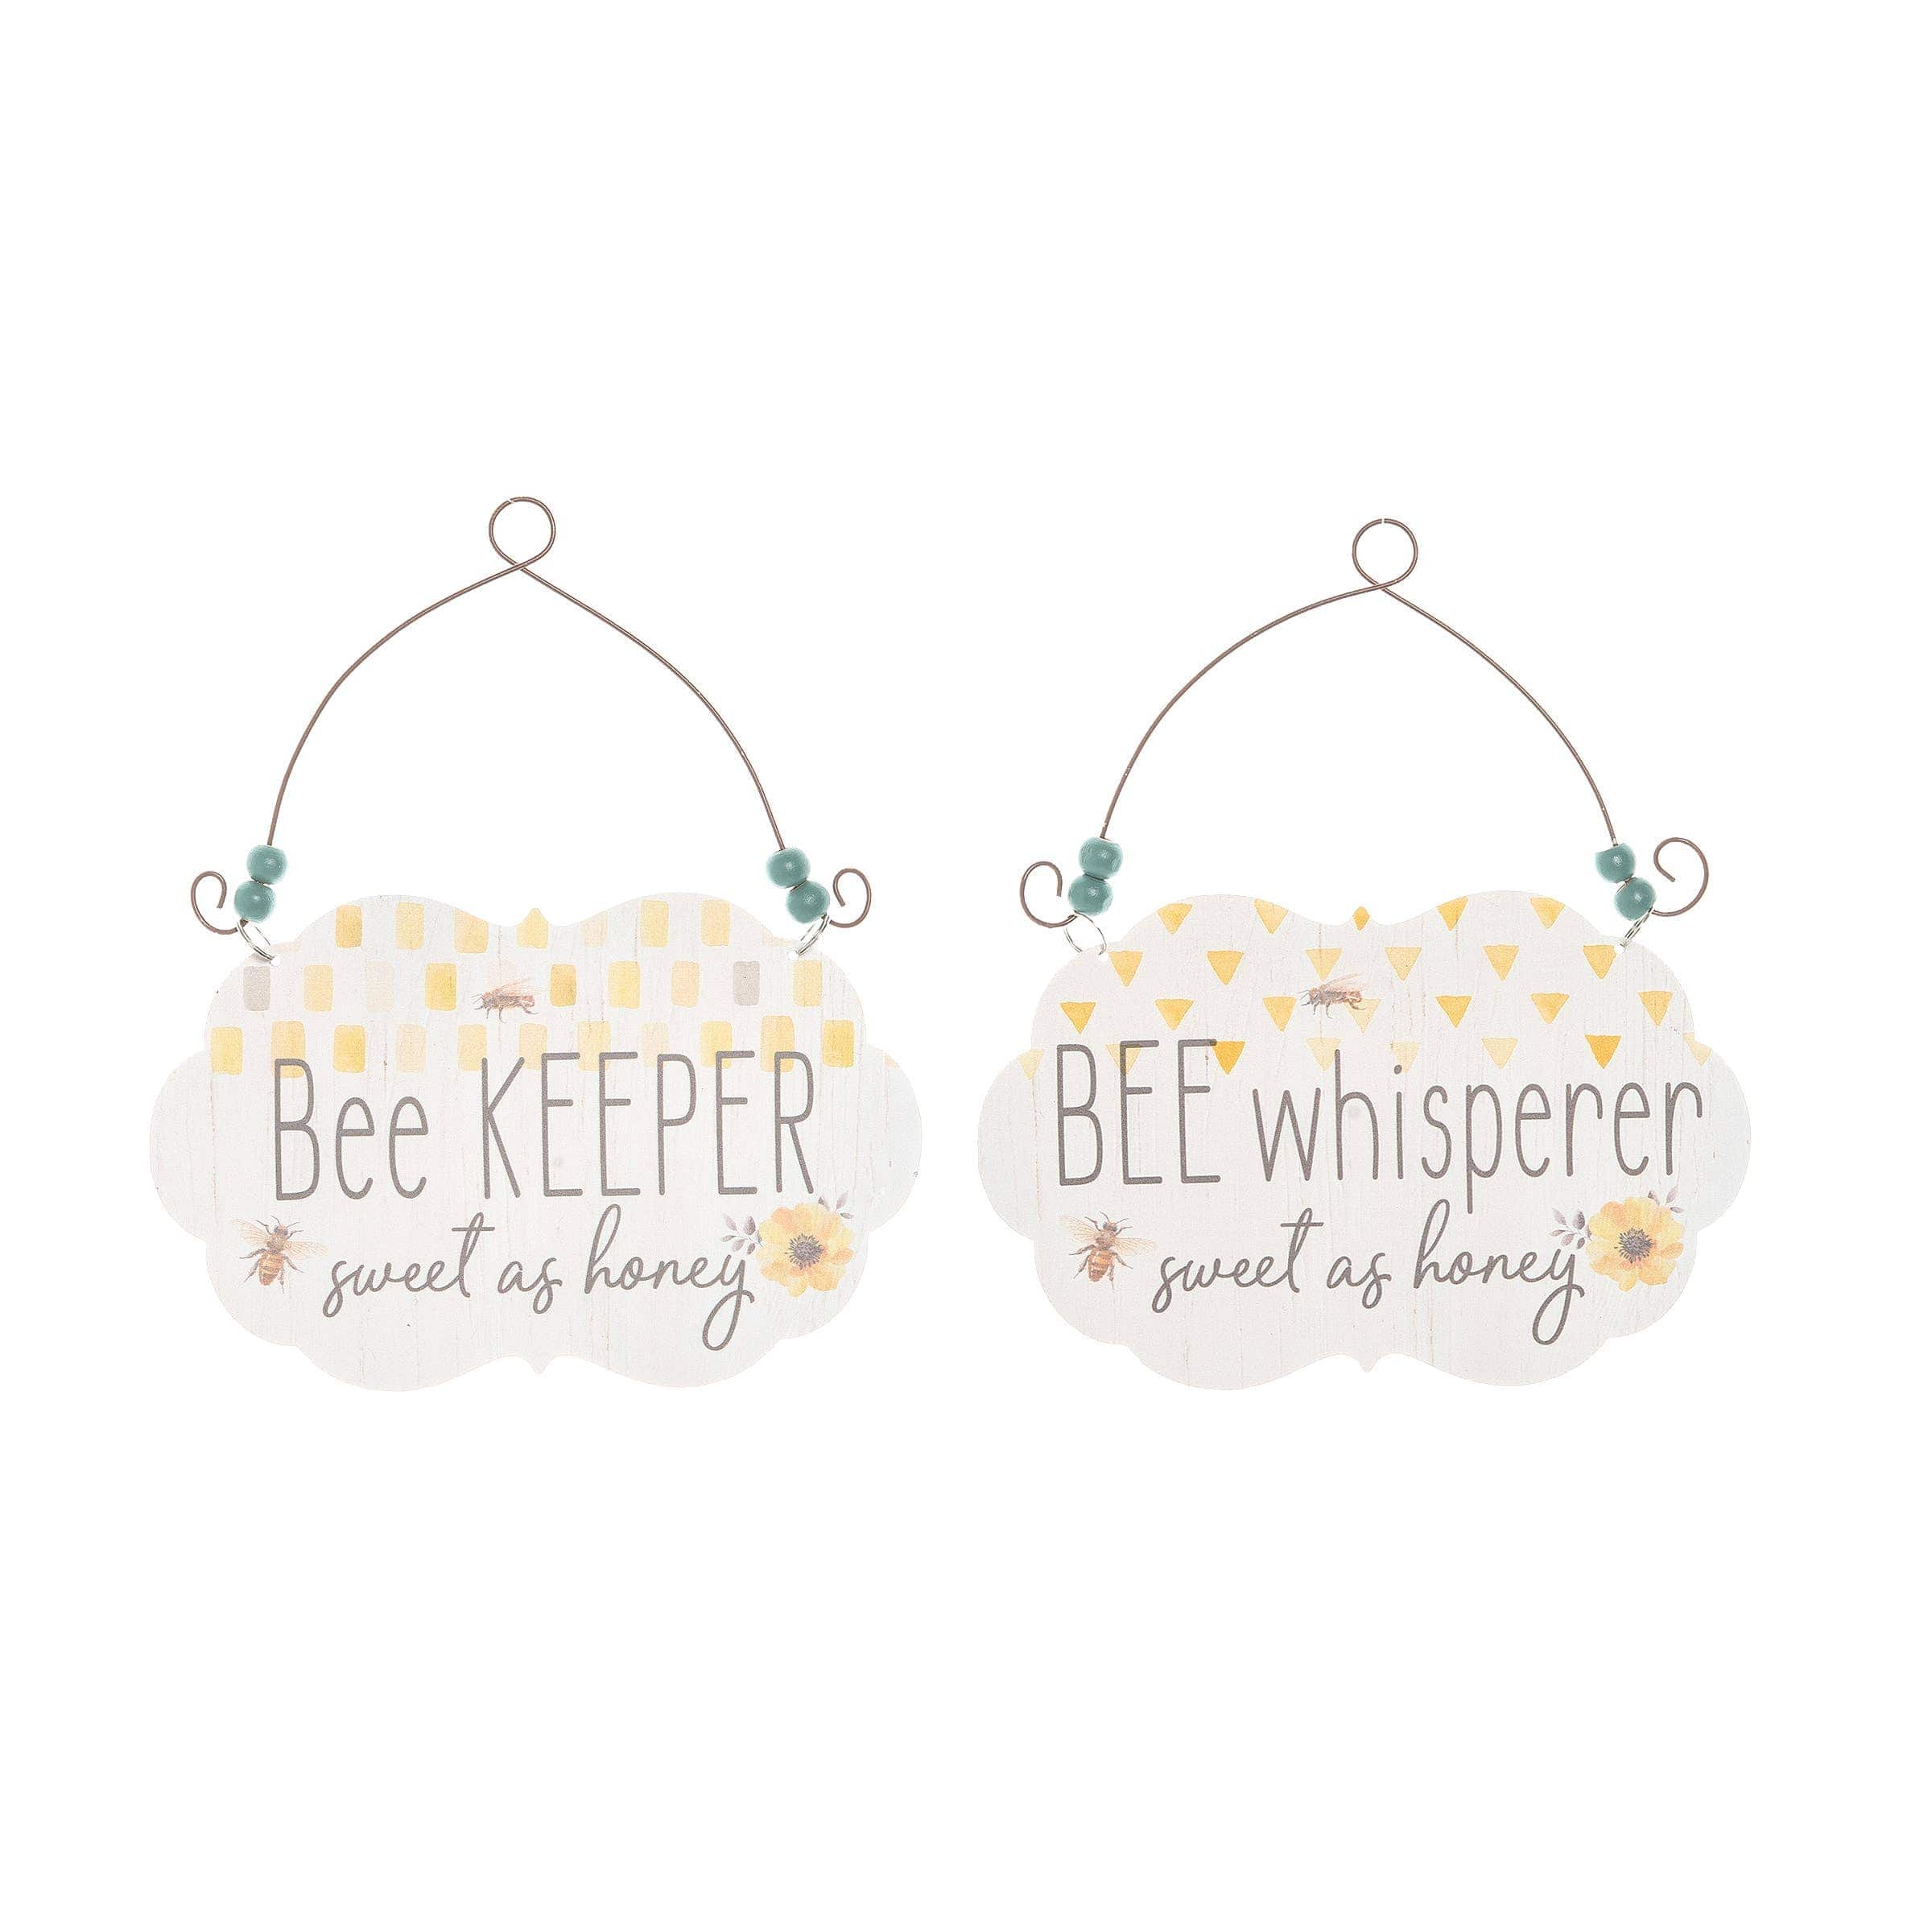 Bee Wall Plaque "Bee Whisper sweet as honey"*